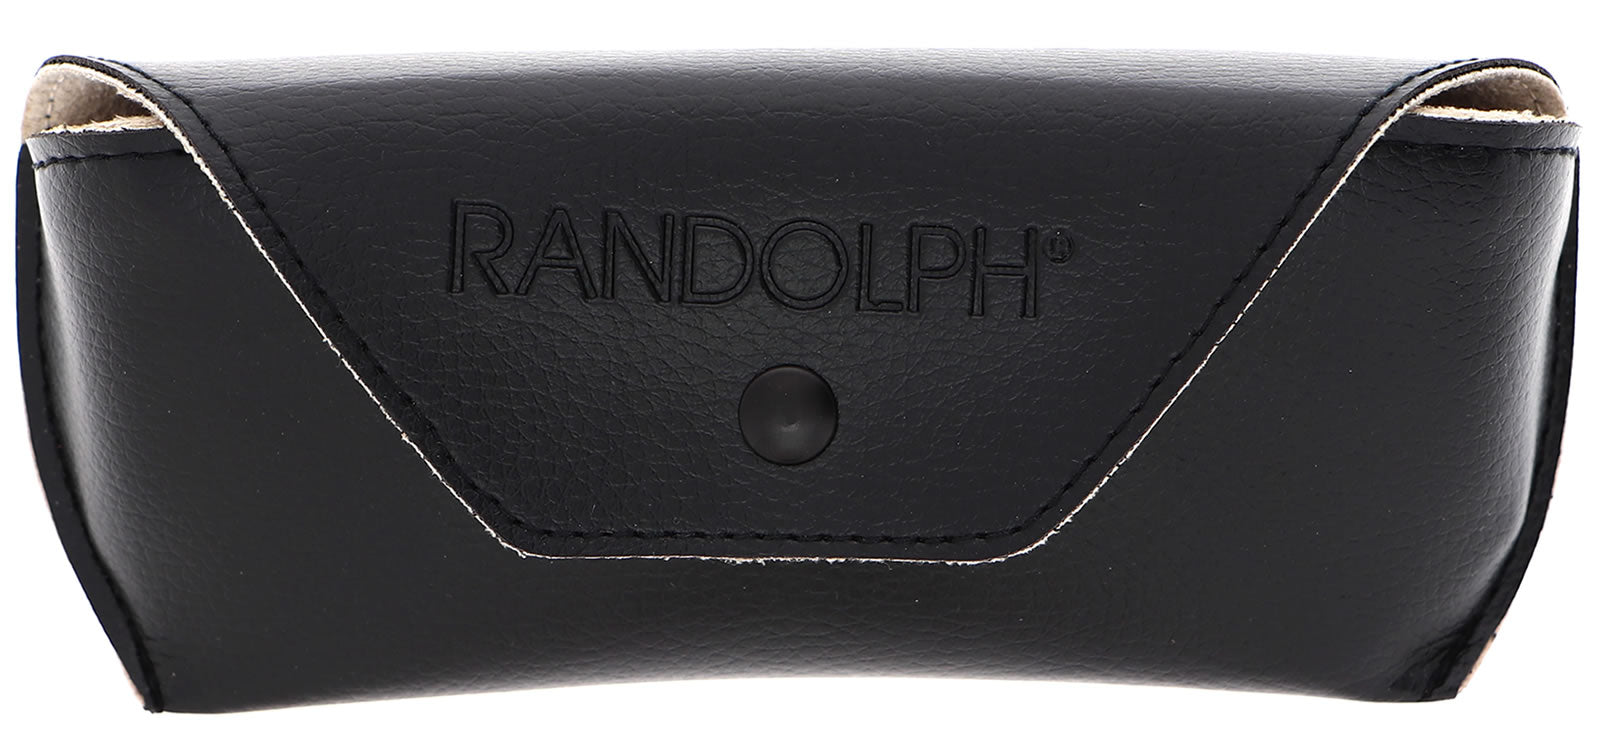 Randolph Travel Sunglass Case